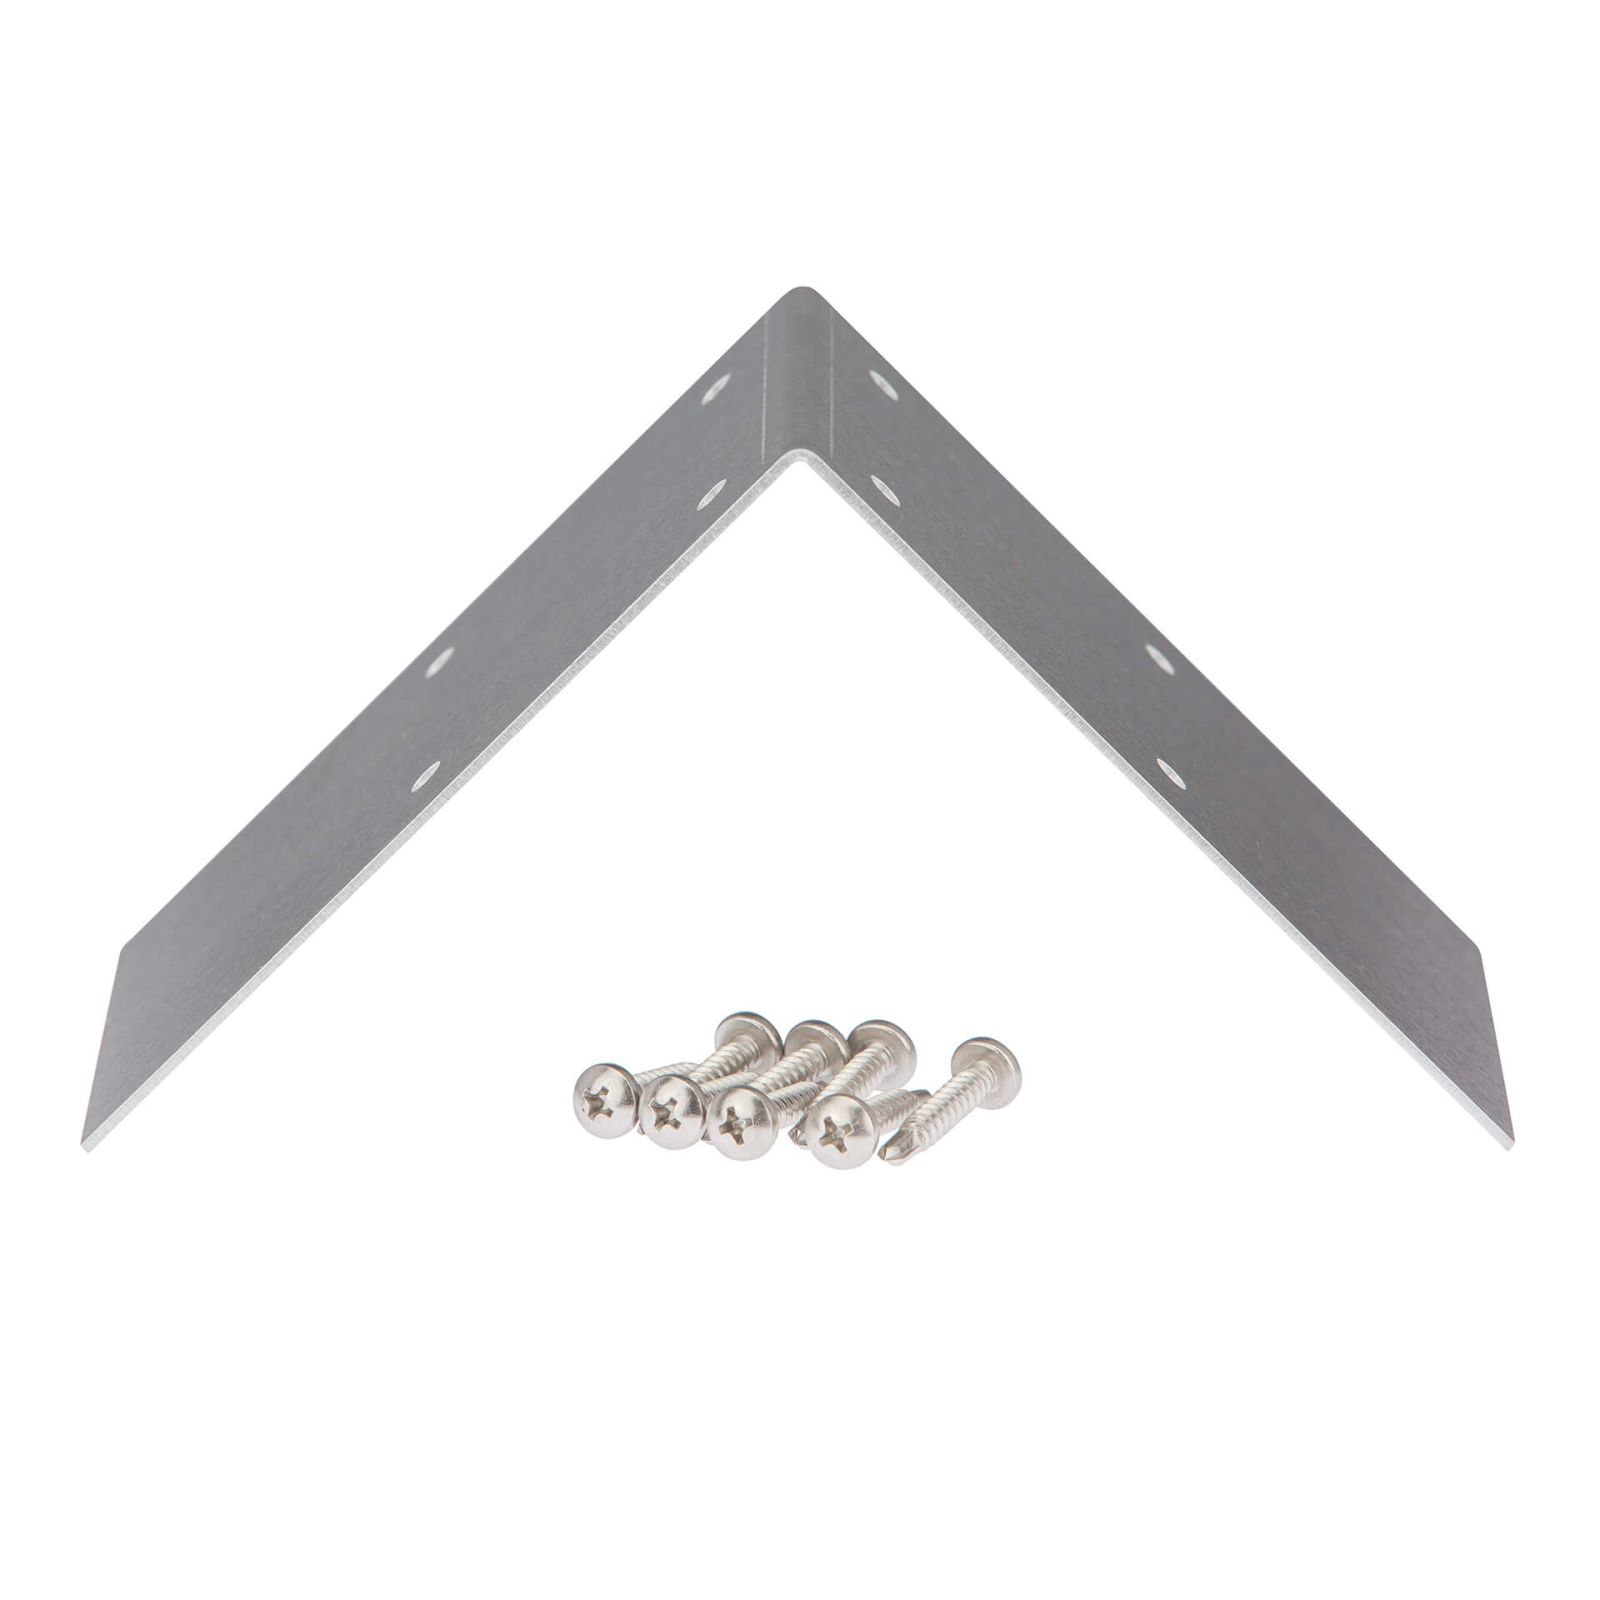 Firstprofilverbinder | Aluminium | Blank #1